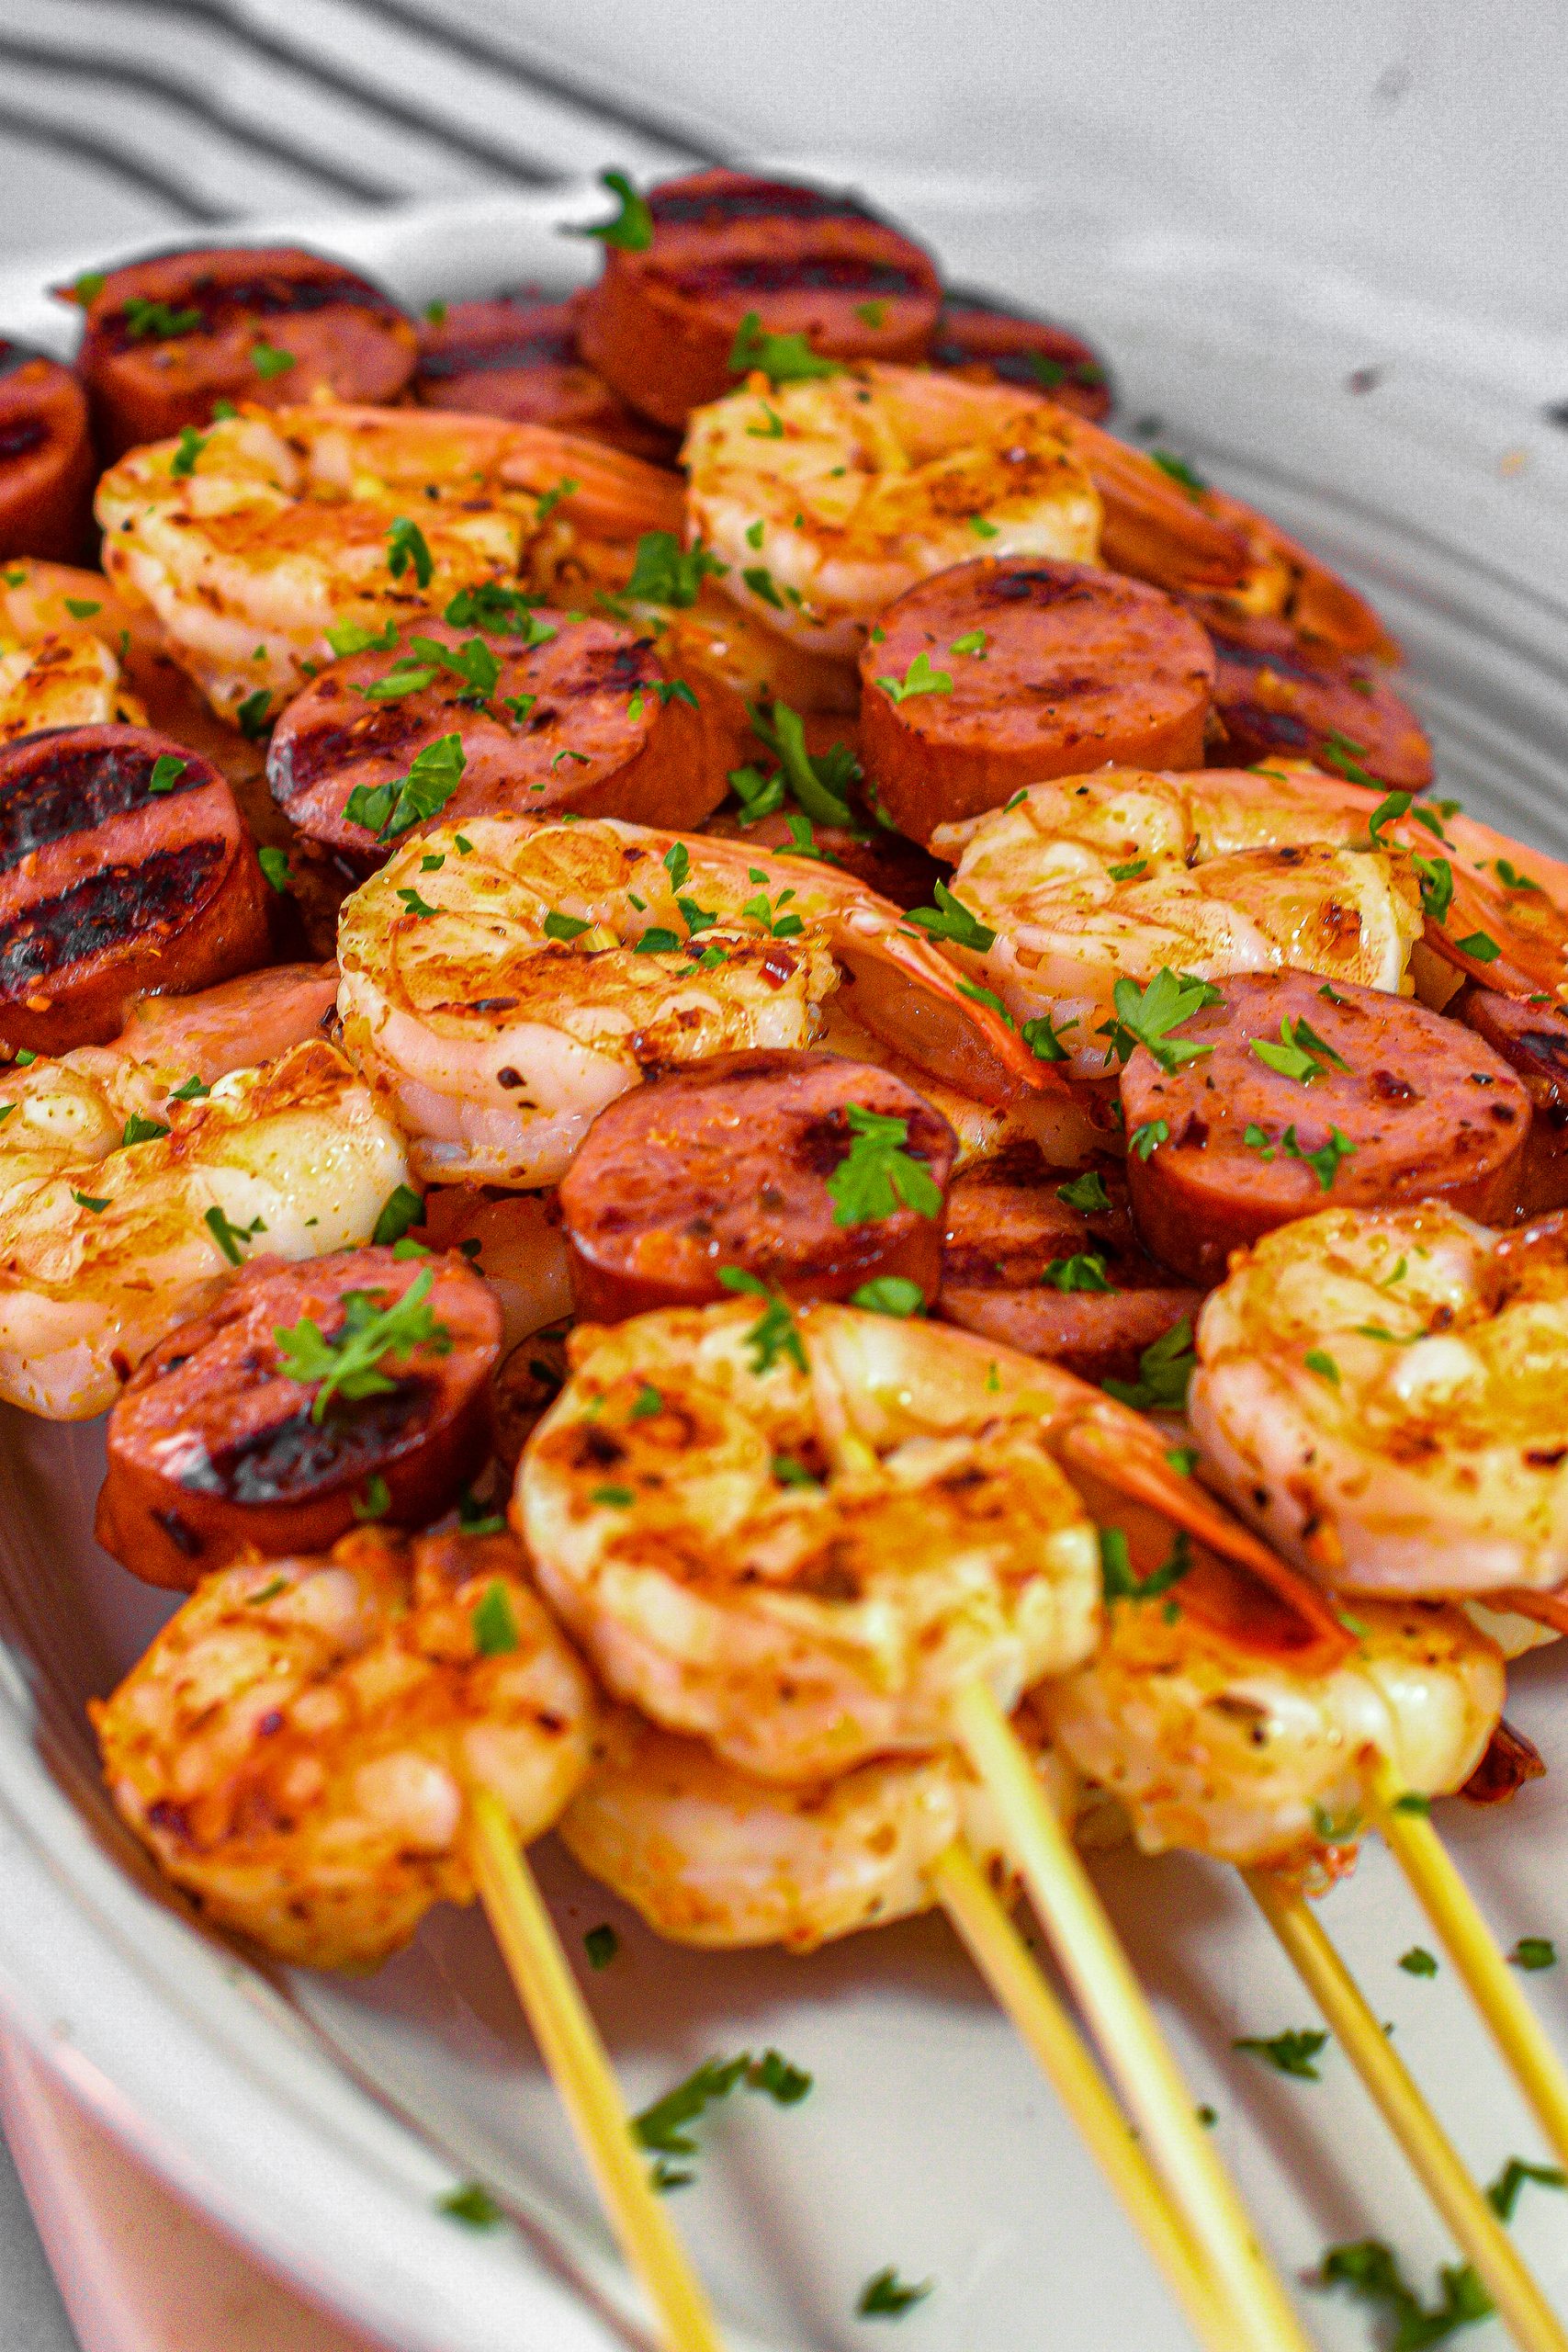 Sausage and Shrimp Kebabs